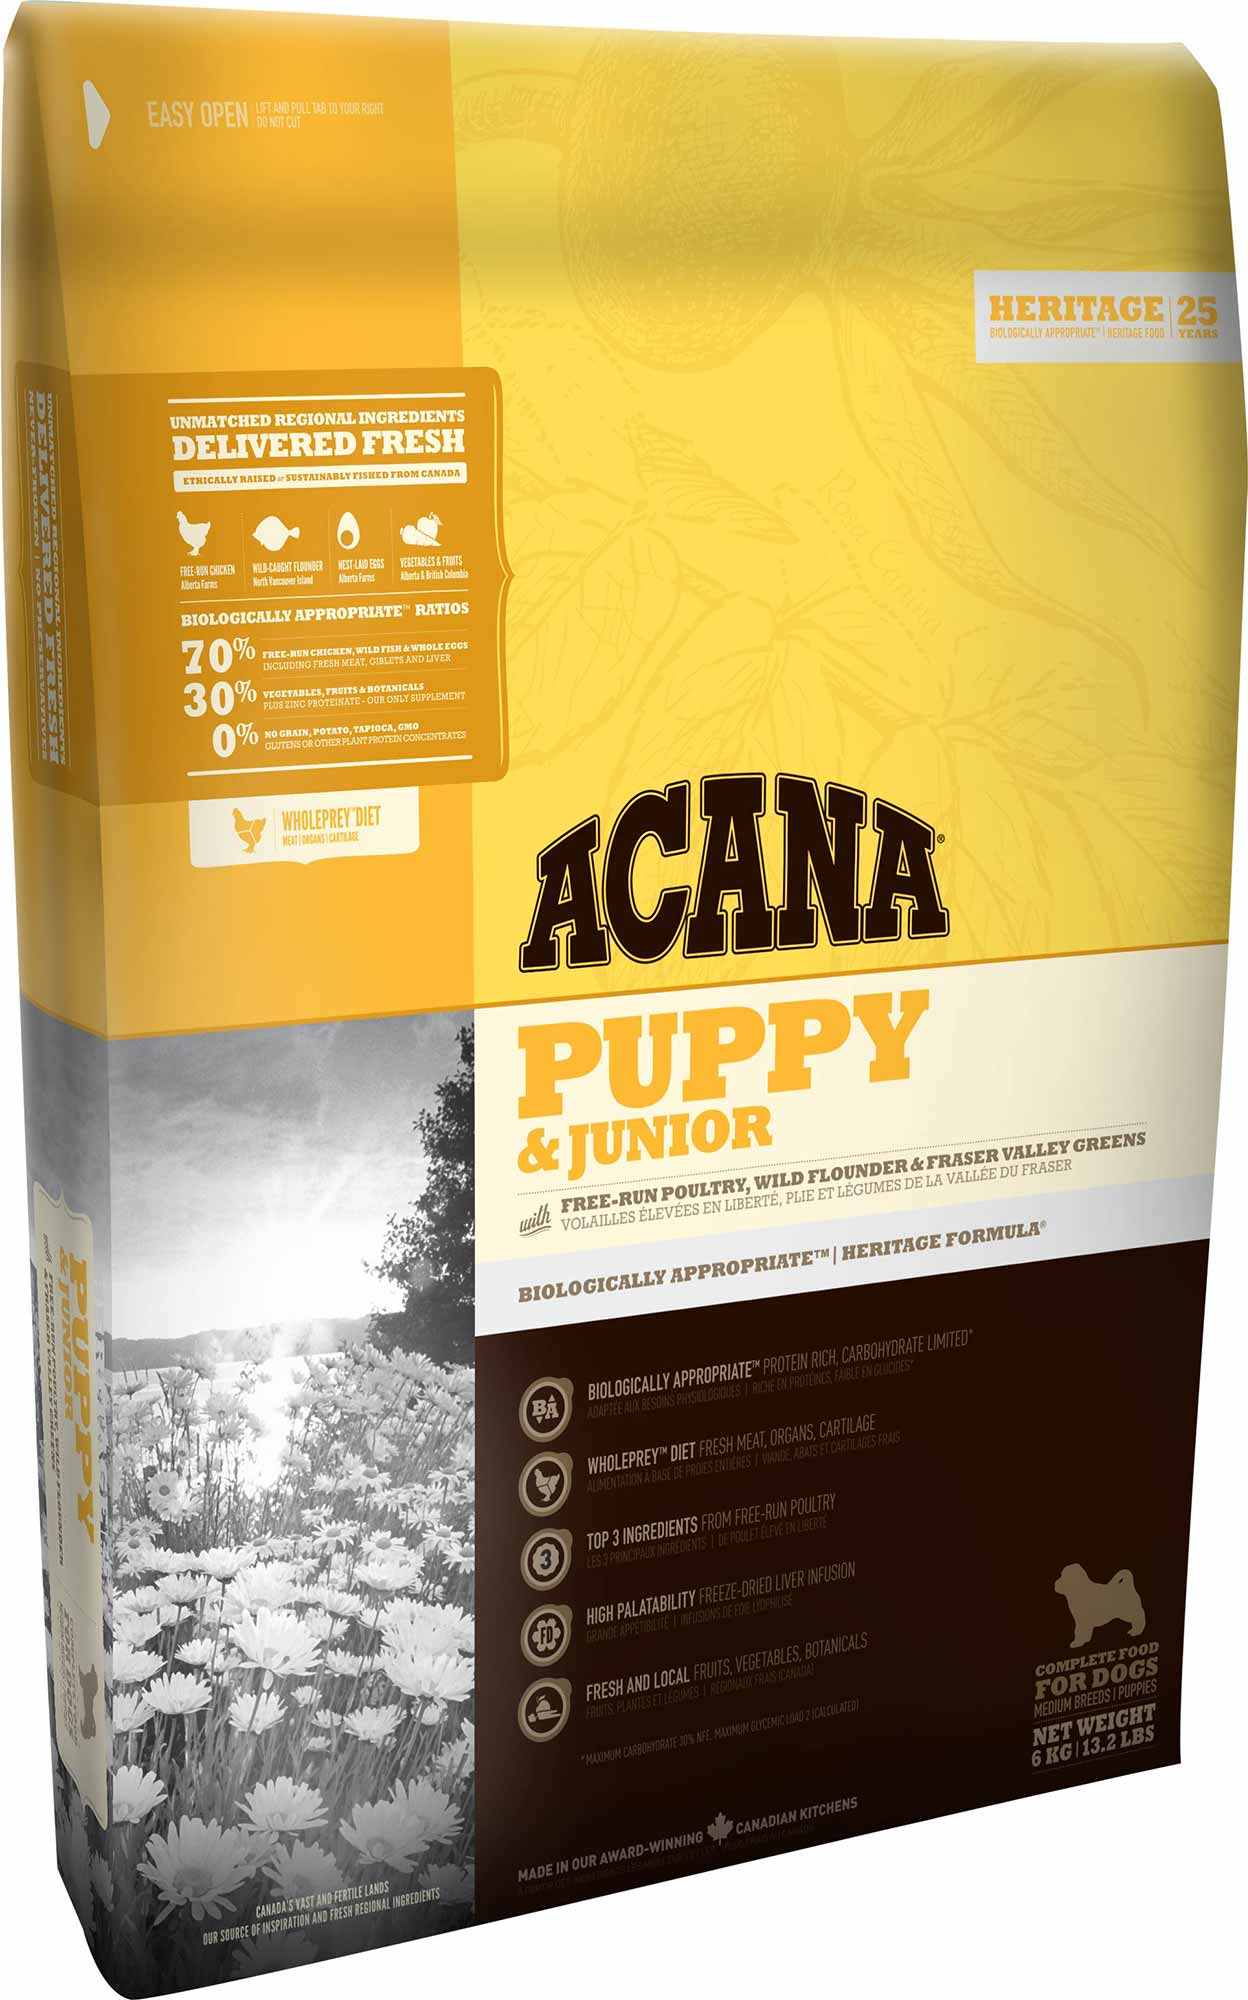 Acana Dog - Heritage - PUPPY & JUNIOR